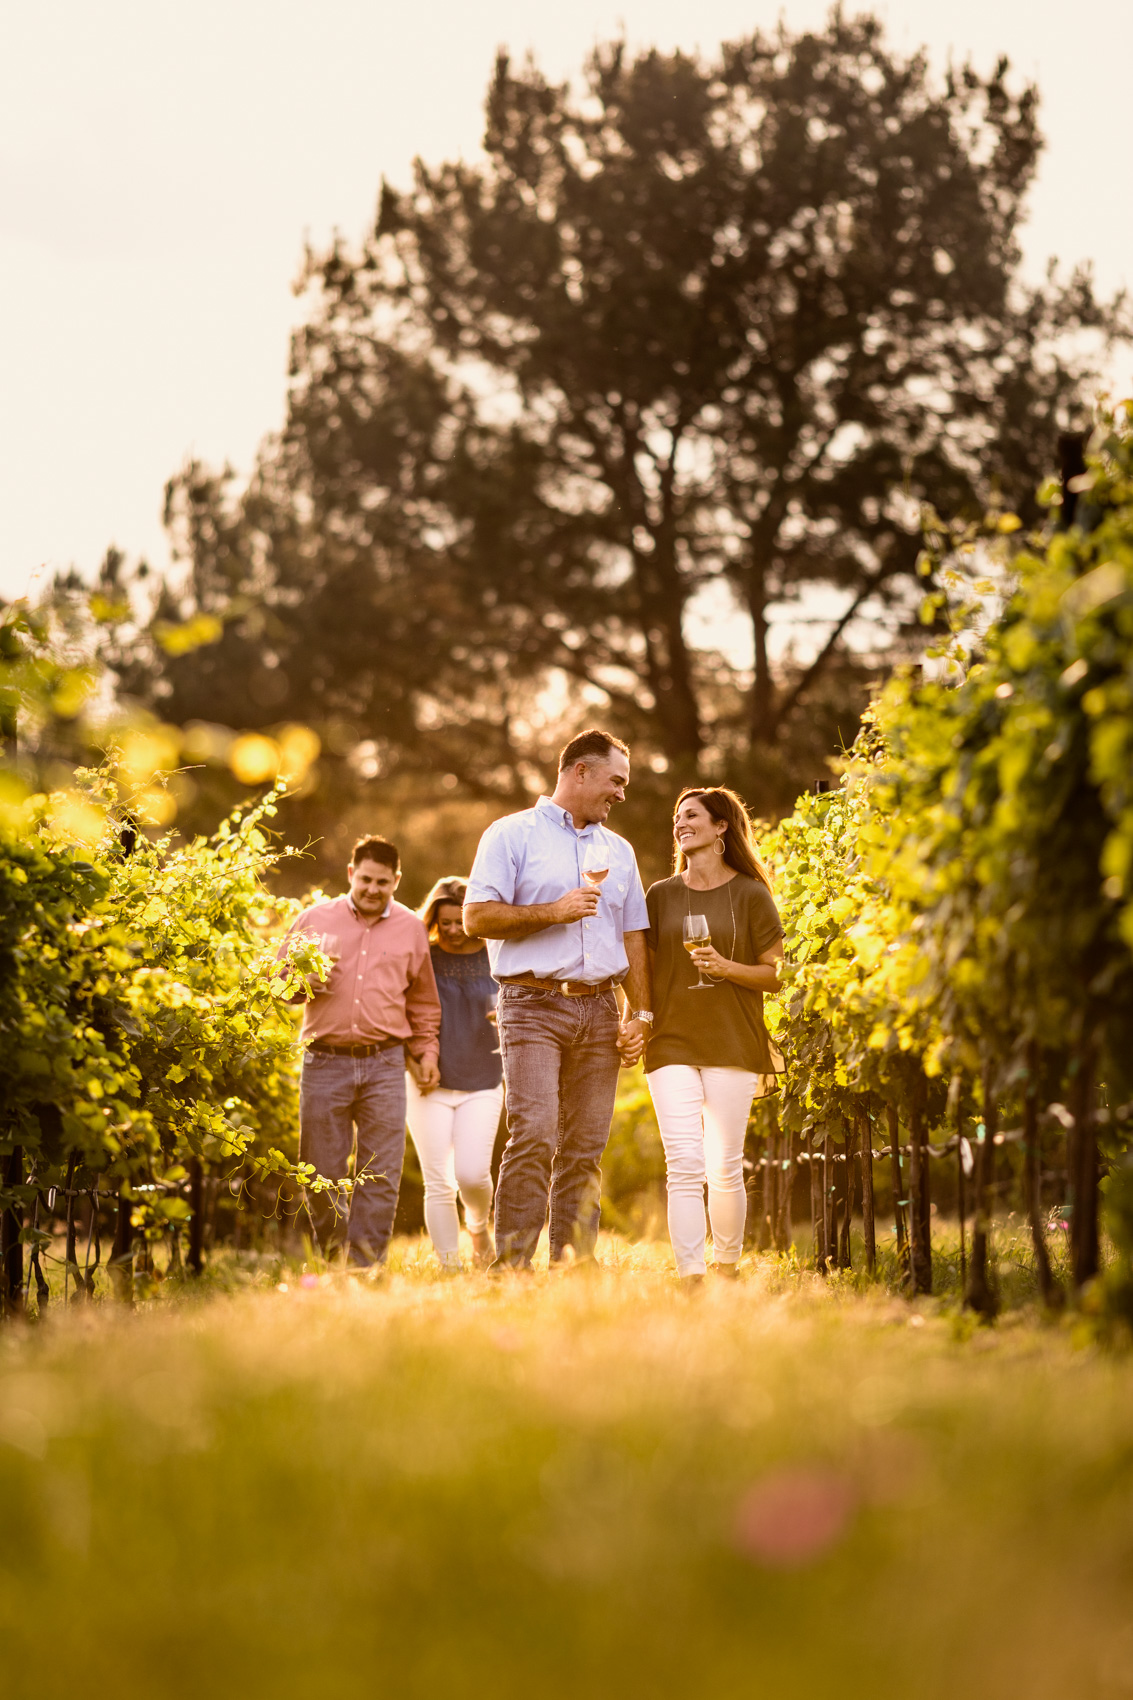 couples walking through vineyard drinking wine in fredericksburg texas